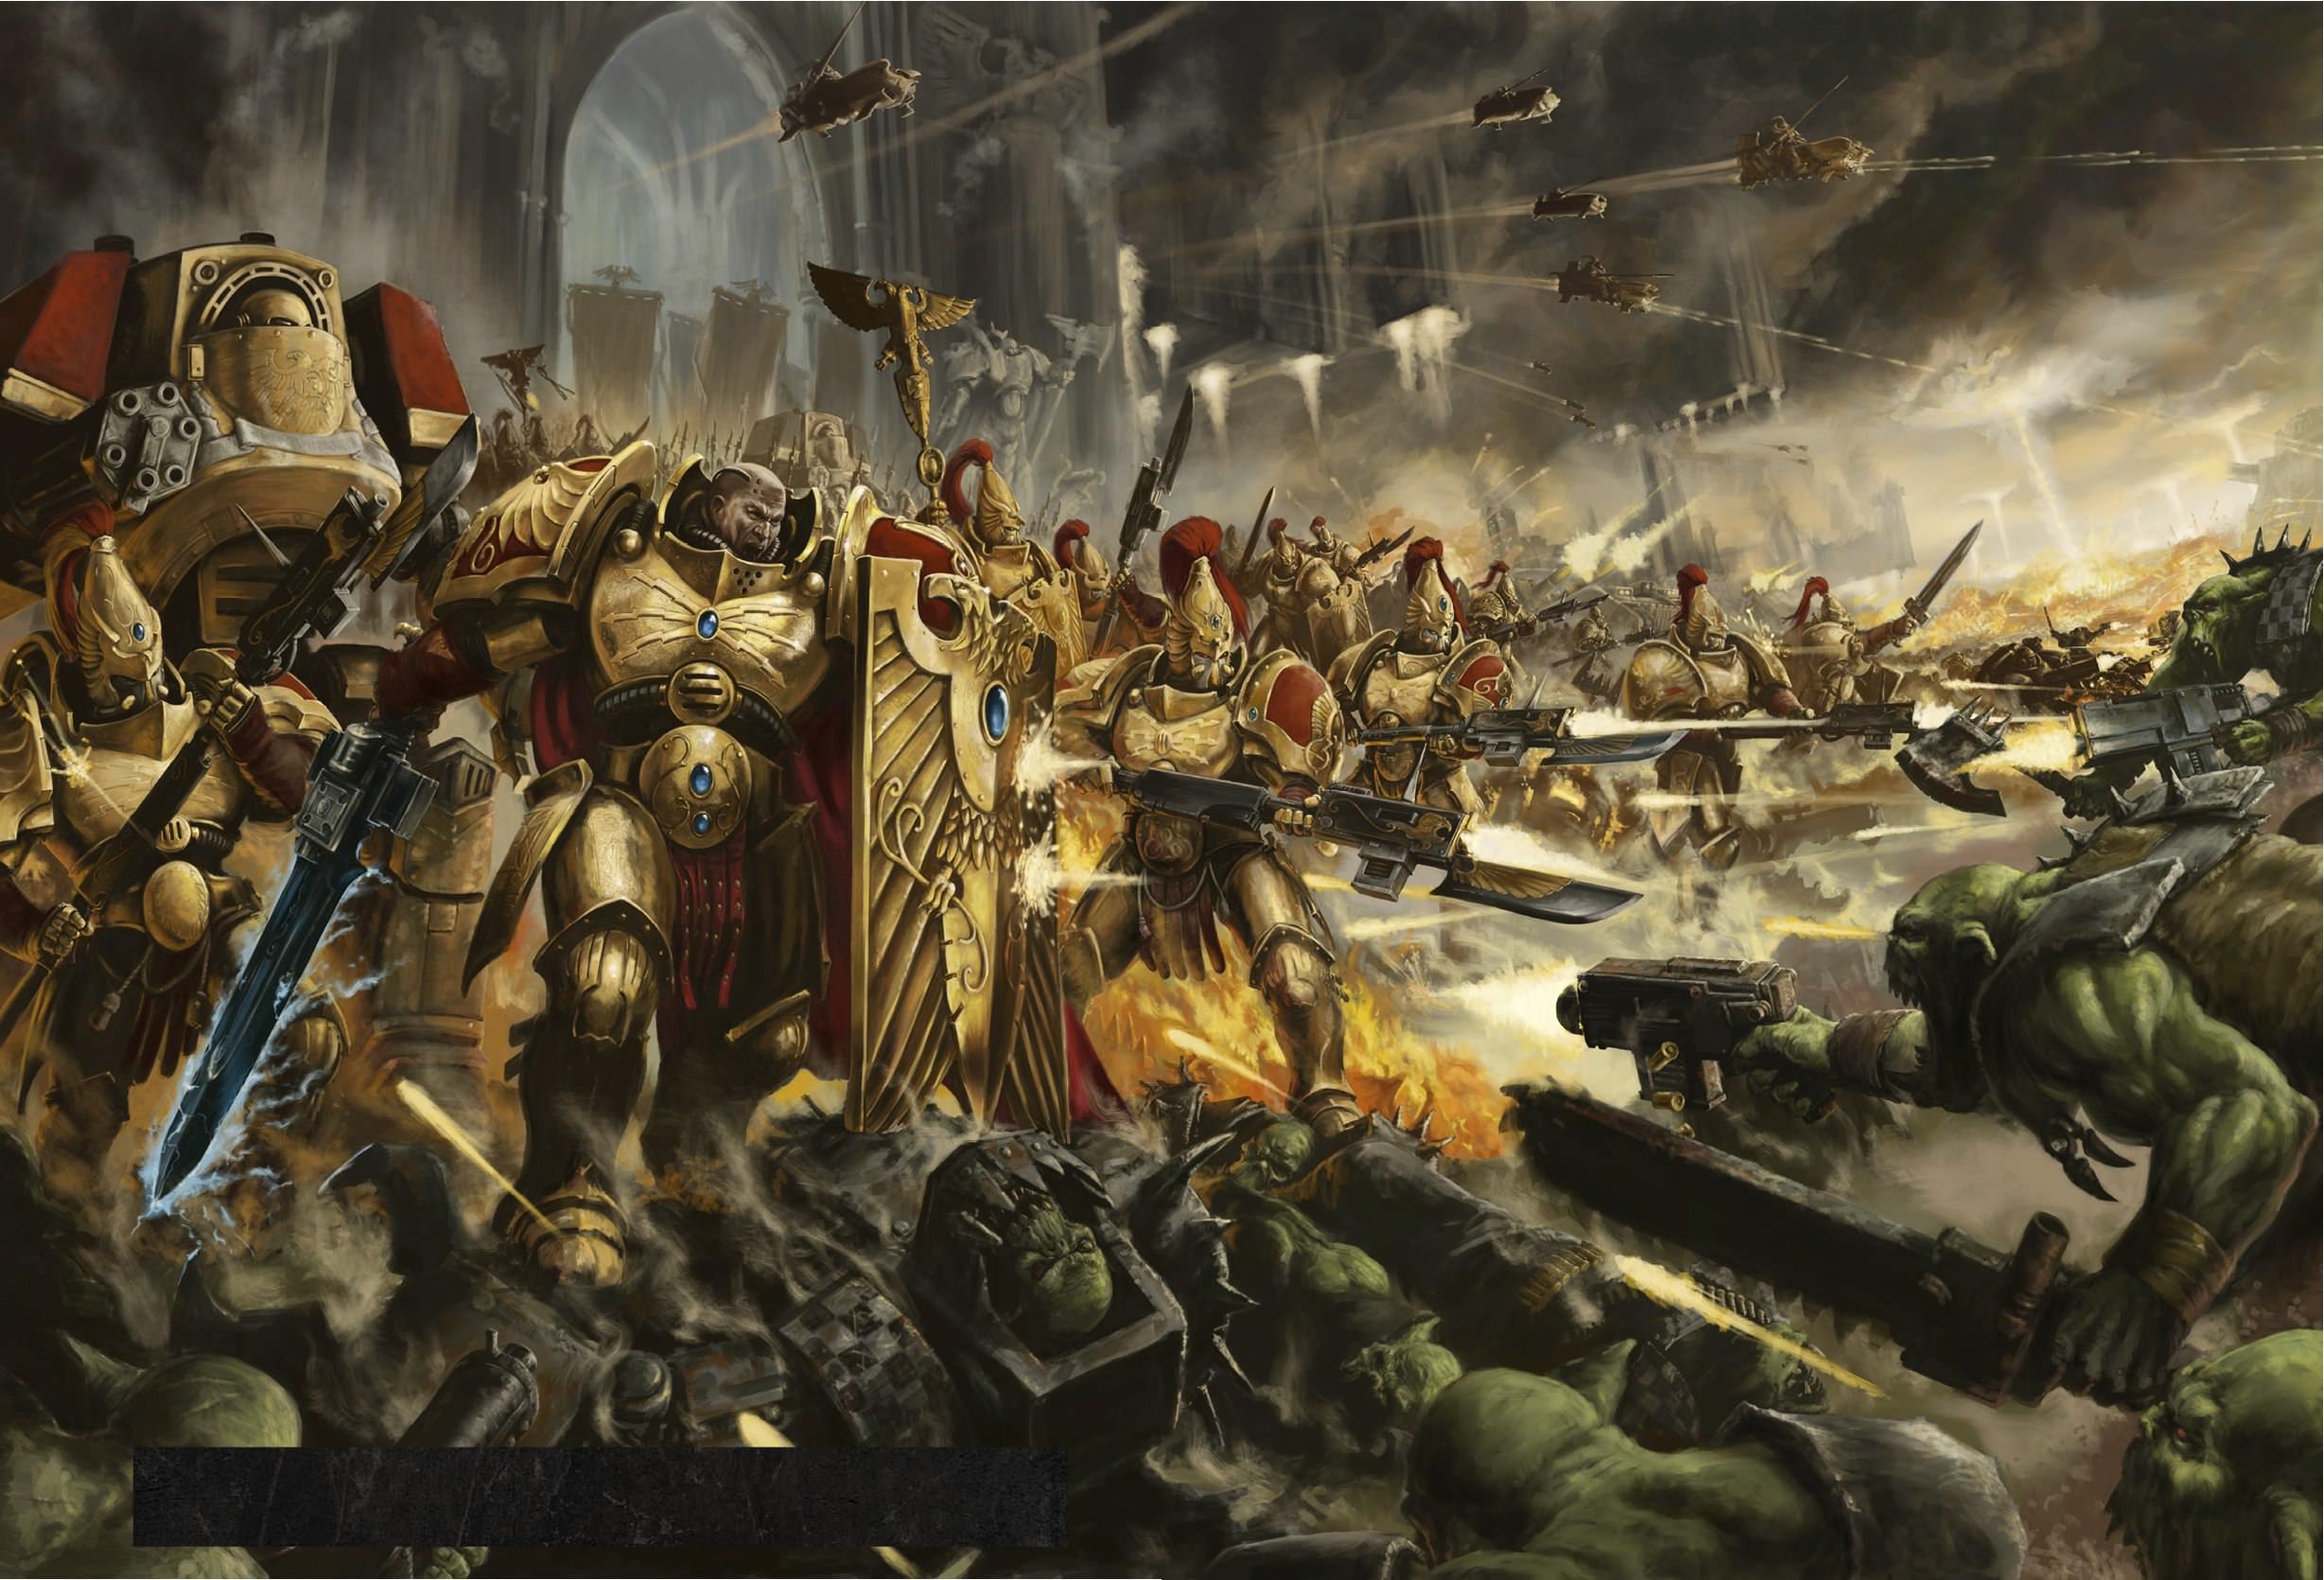 Warhammer 40K Wallpapers